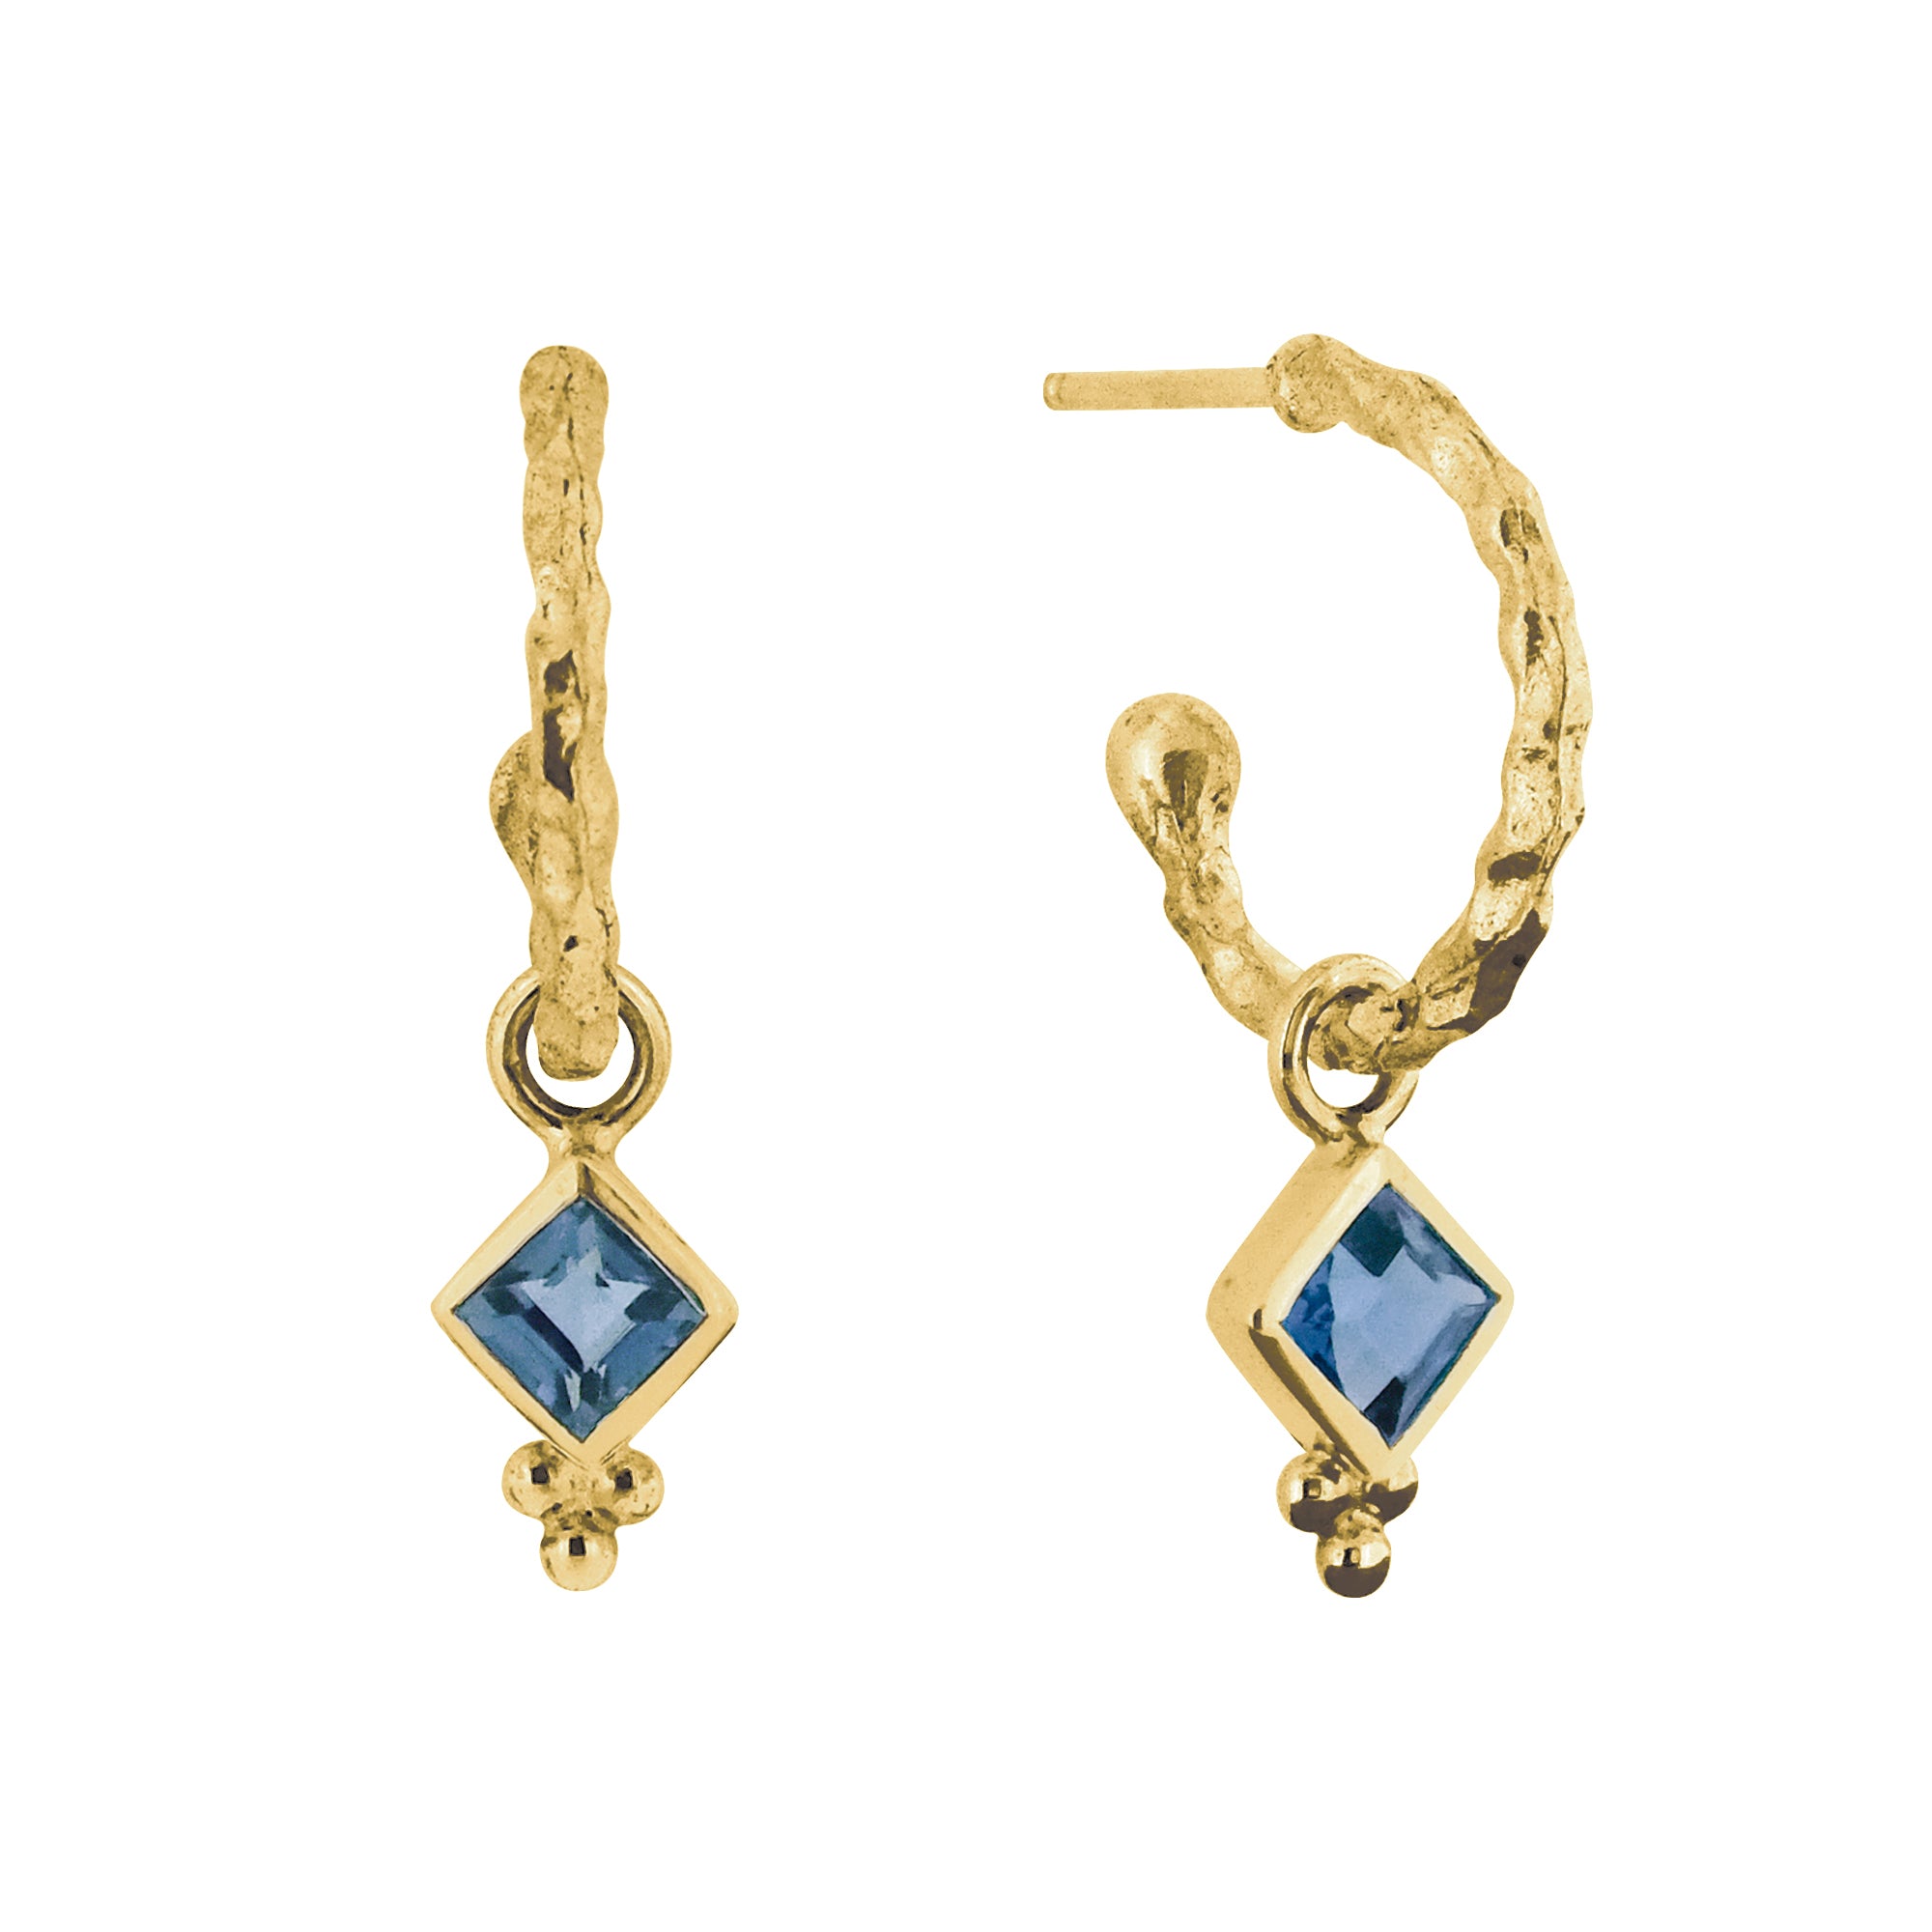 Gold vermeil hammered hoops, London Blue Topaz Earrings